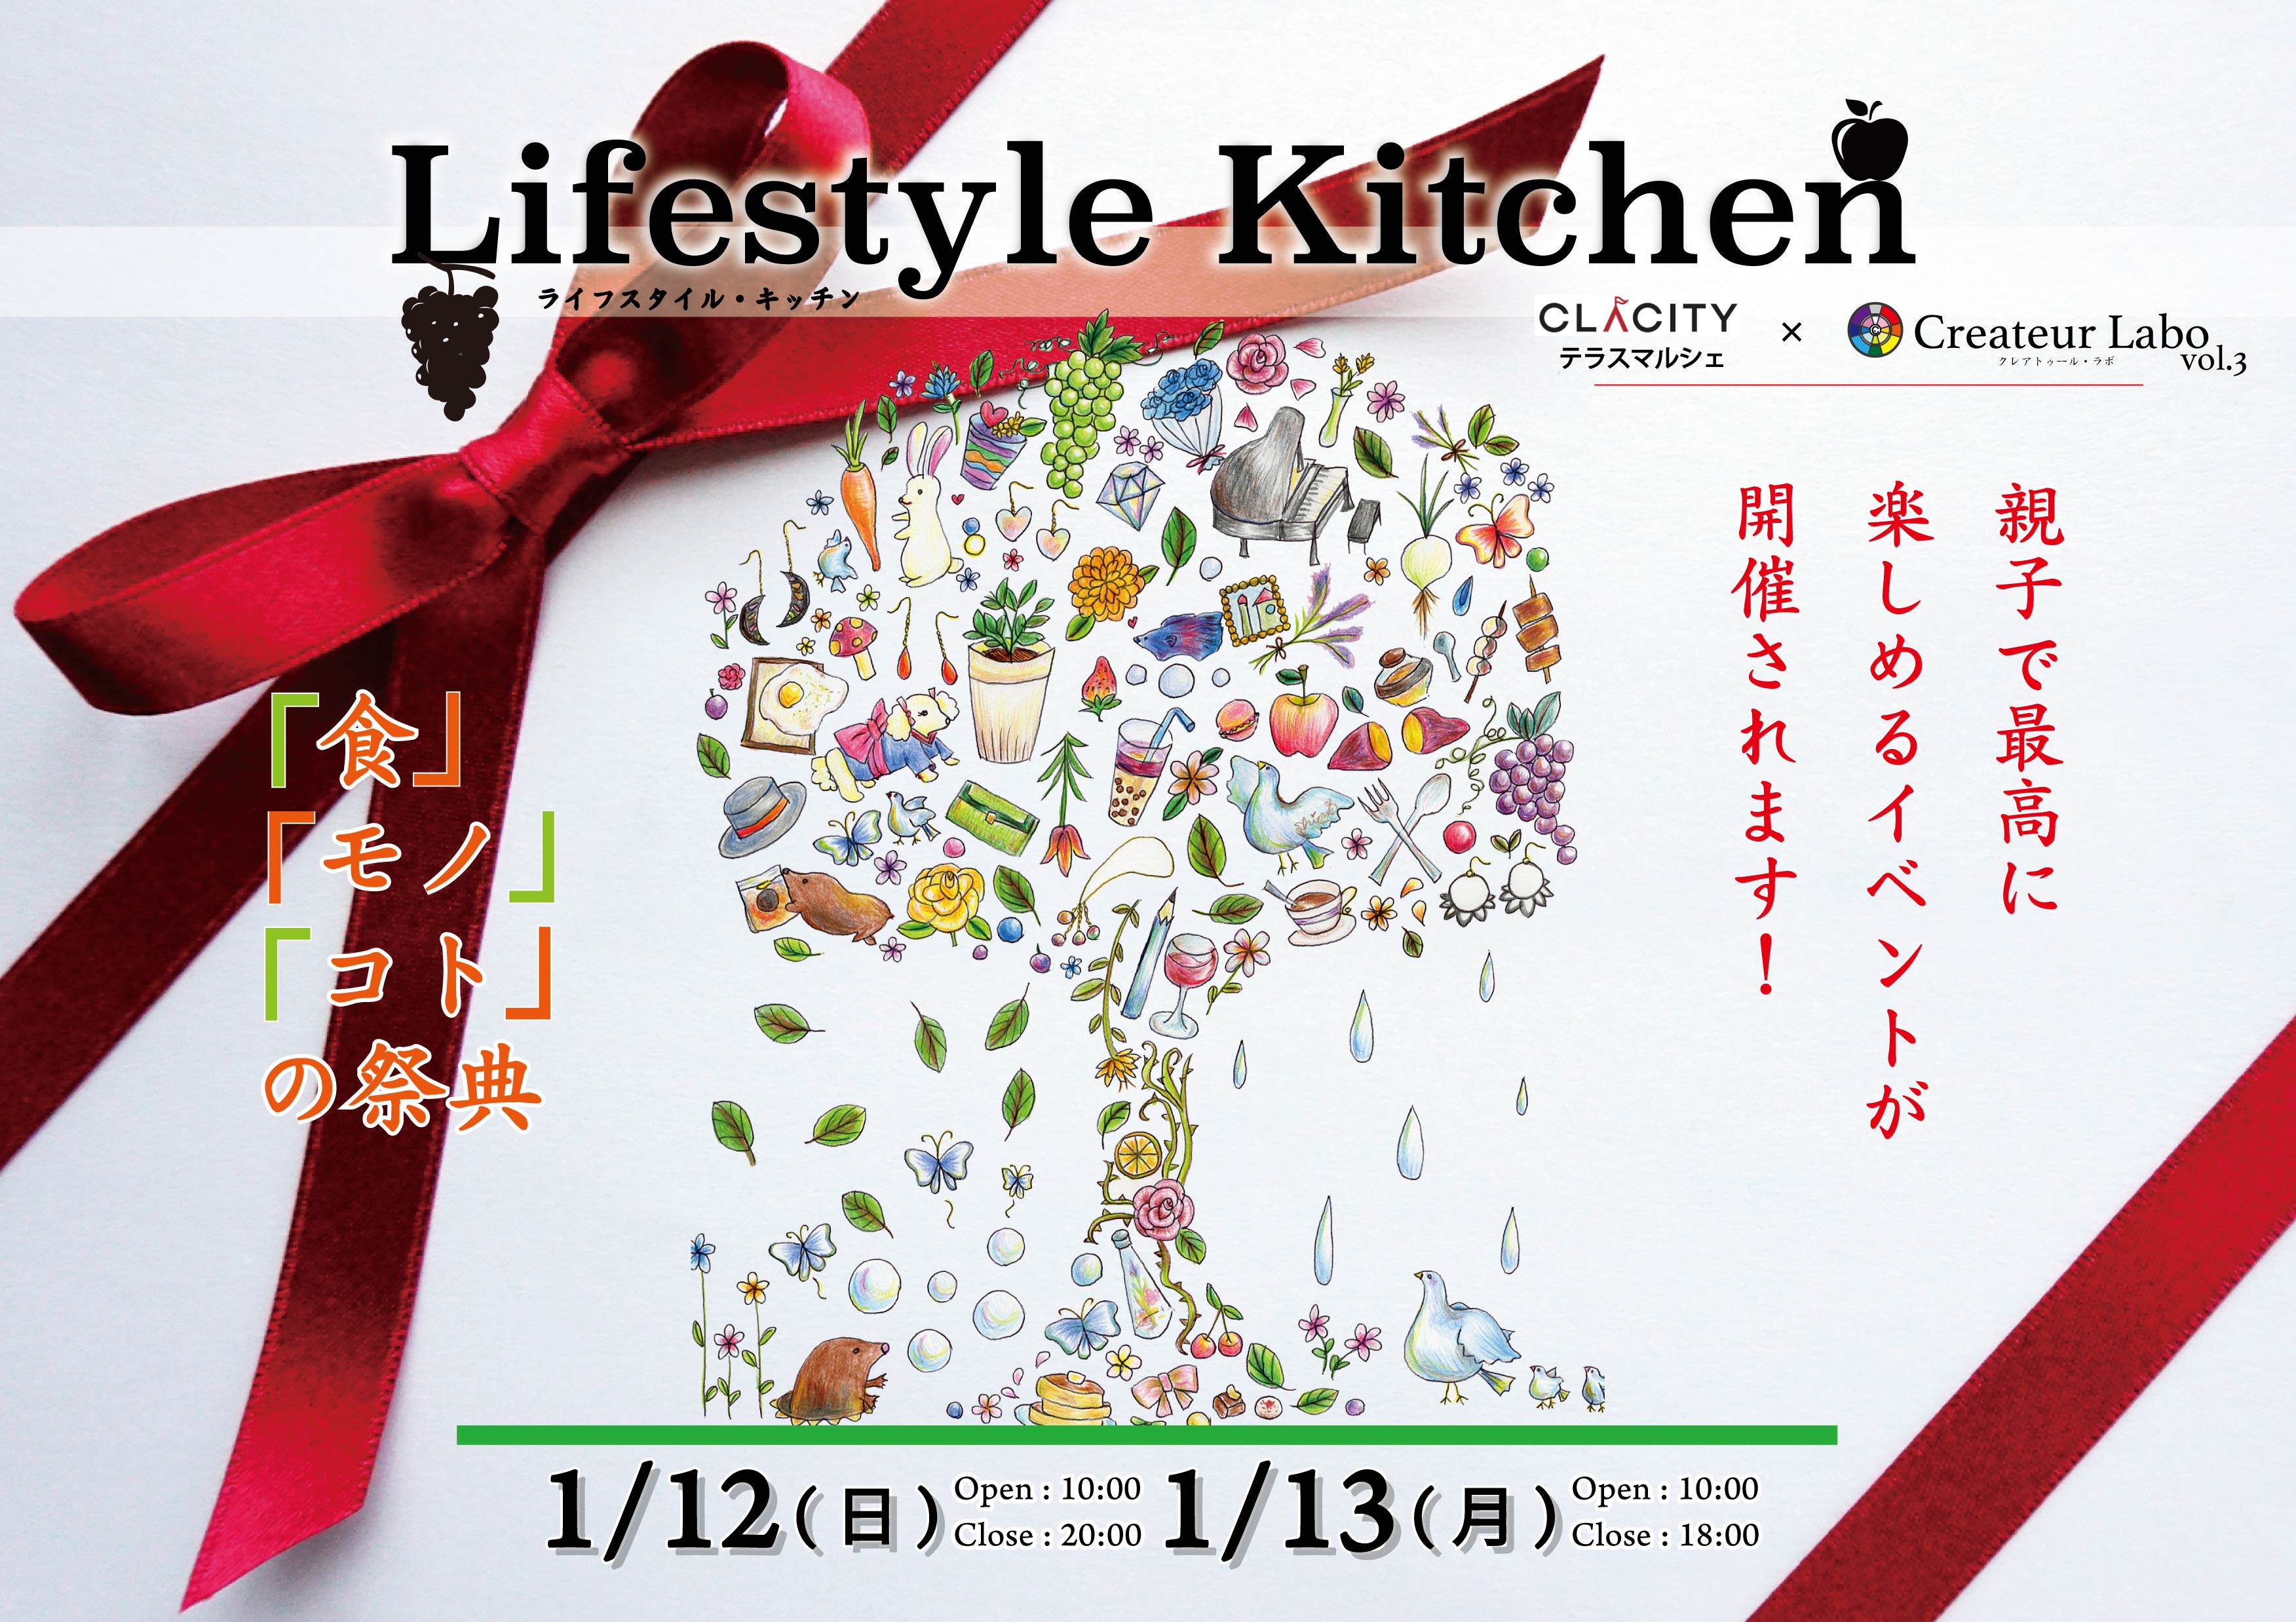 CLACITYテラスマルシェ × Createur Labo vol.3 『Lifestyle kitchen』開催決定！